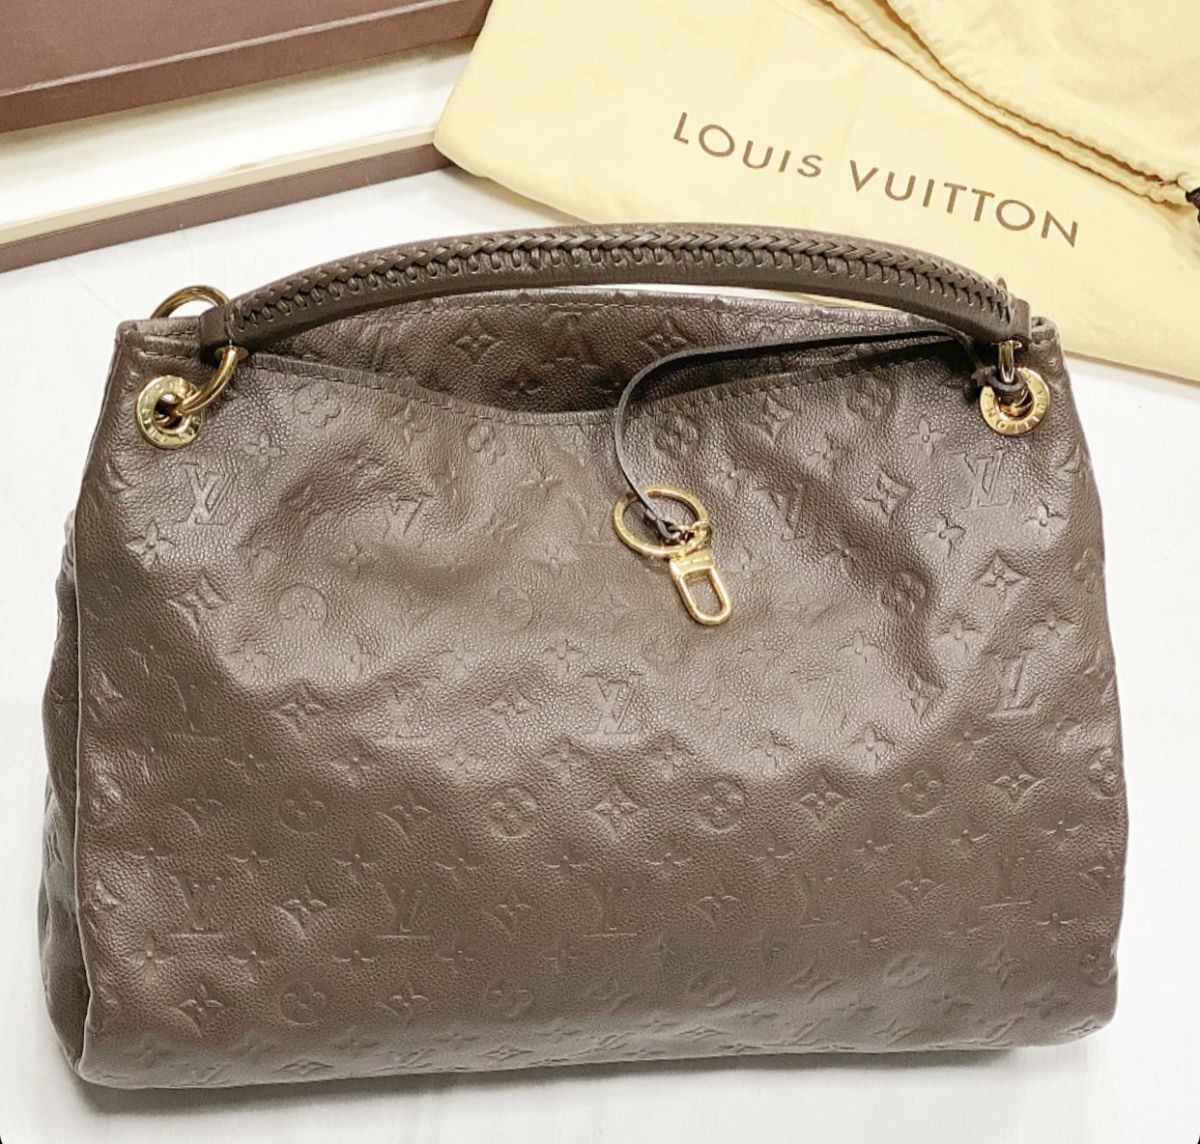 Сумка Louis Vuitton размер 40/30 цена 61 540 руб 